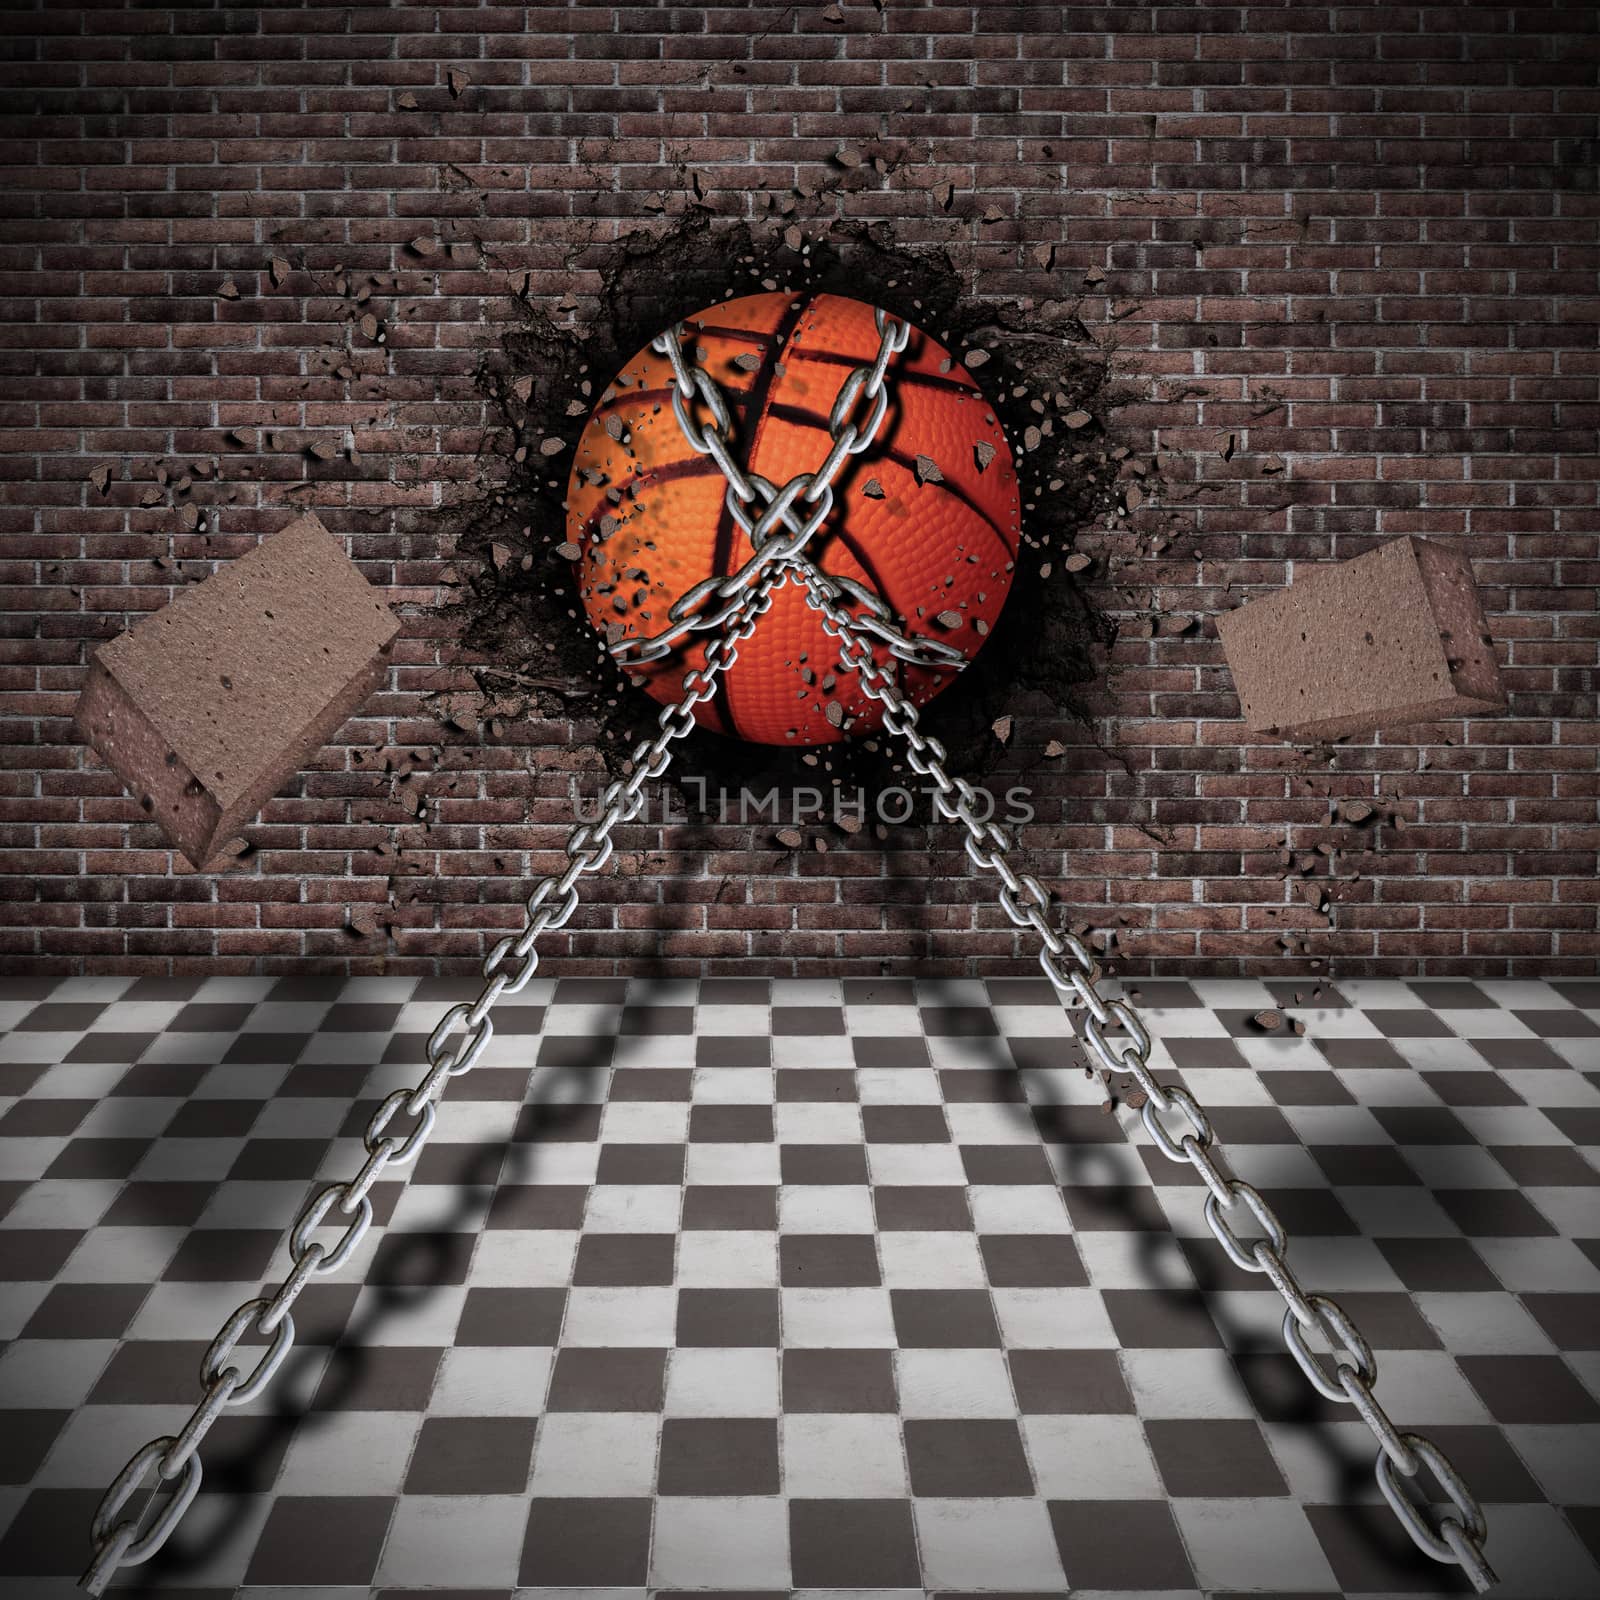 basketball embedded in a brick wall